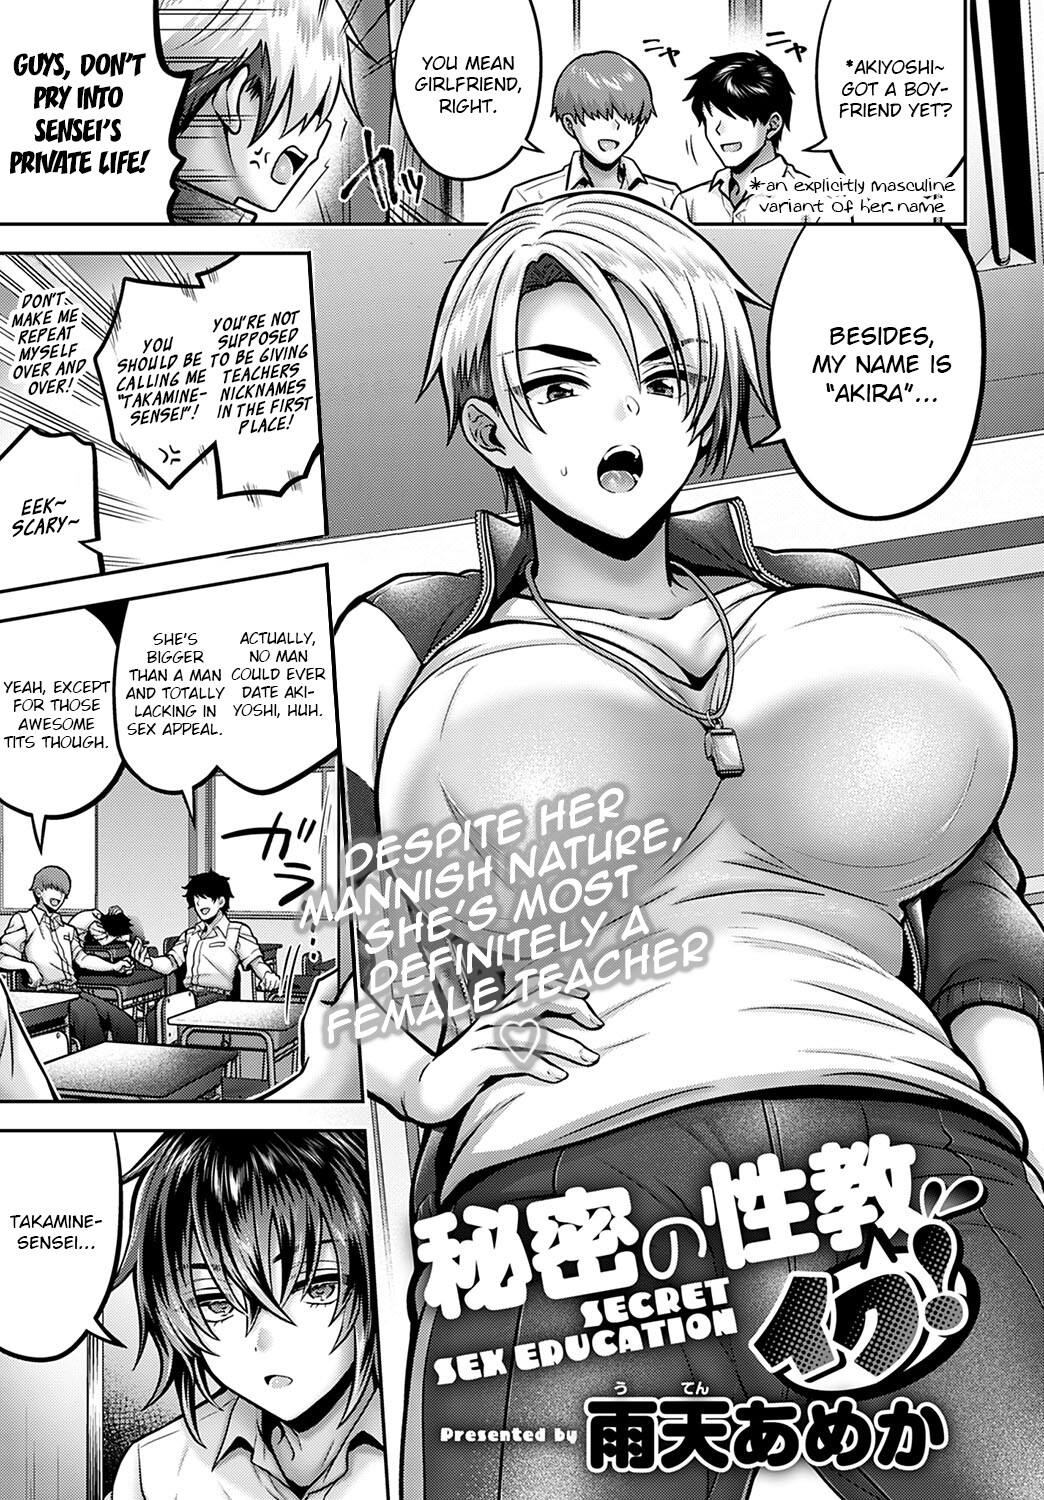 Hentai Manga Comic-Secret Sex Education!-Read-1